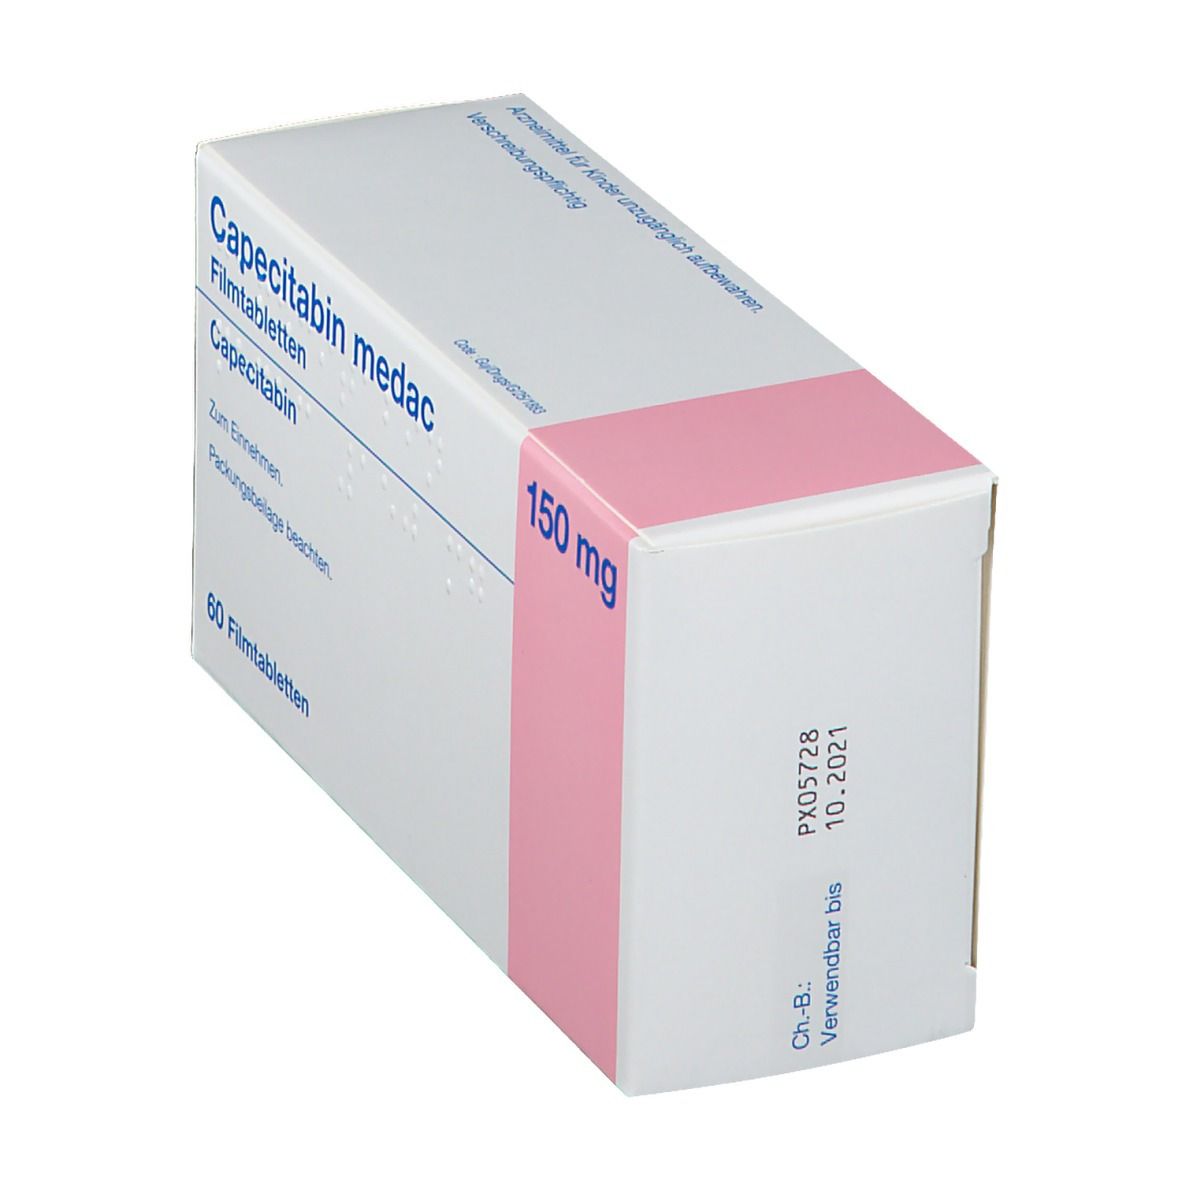 Capecitabin medac 150 mg